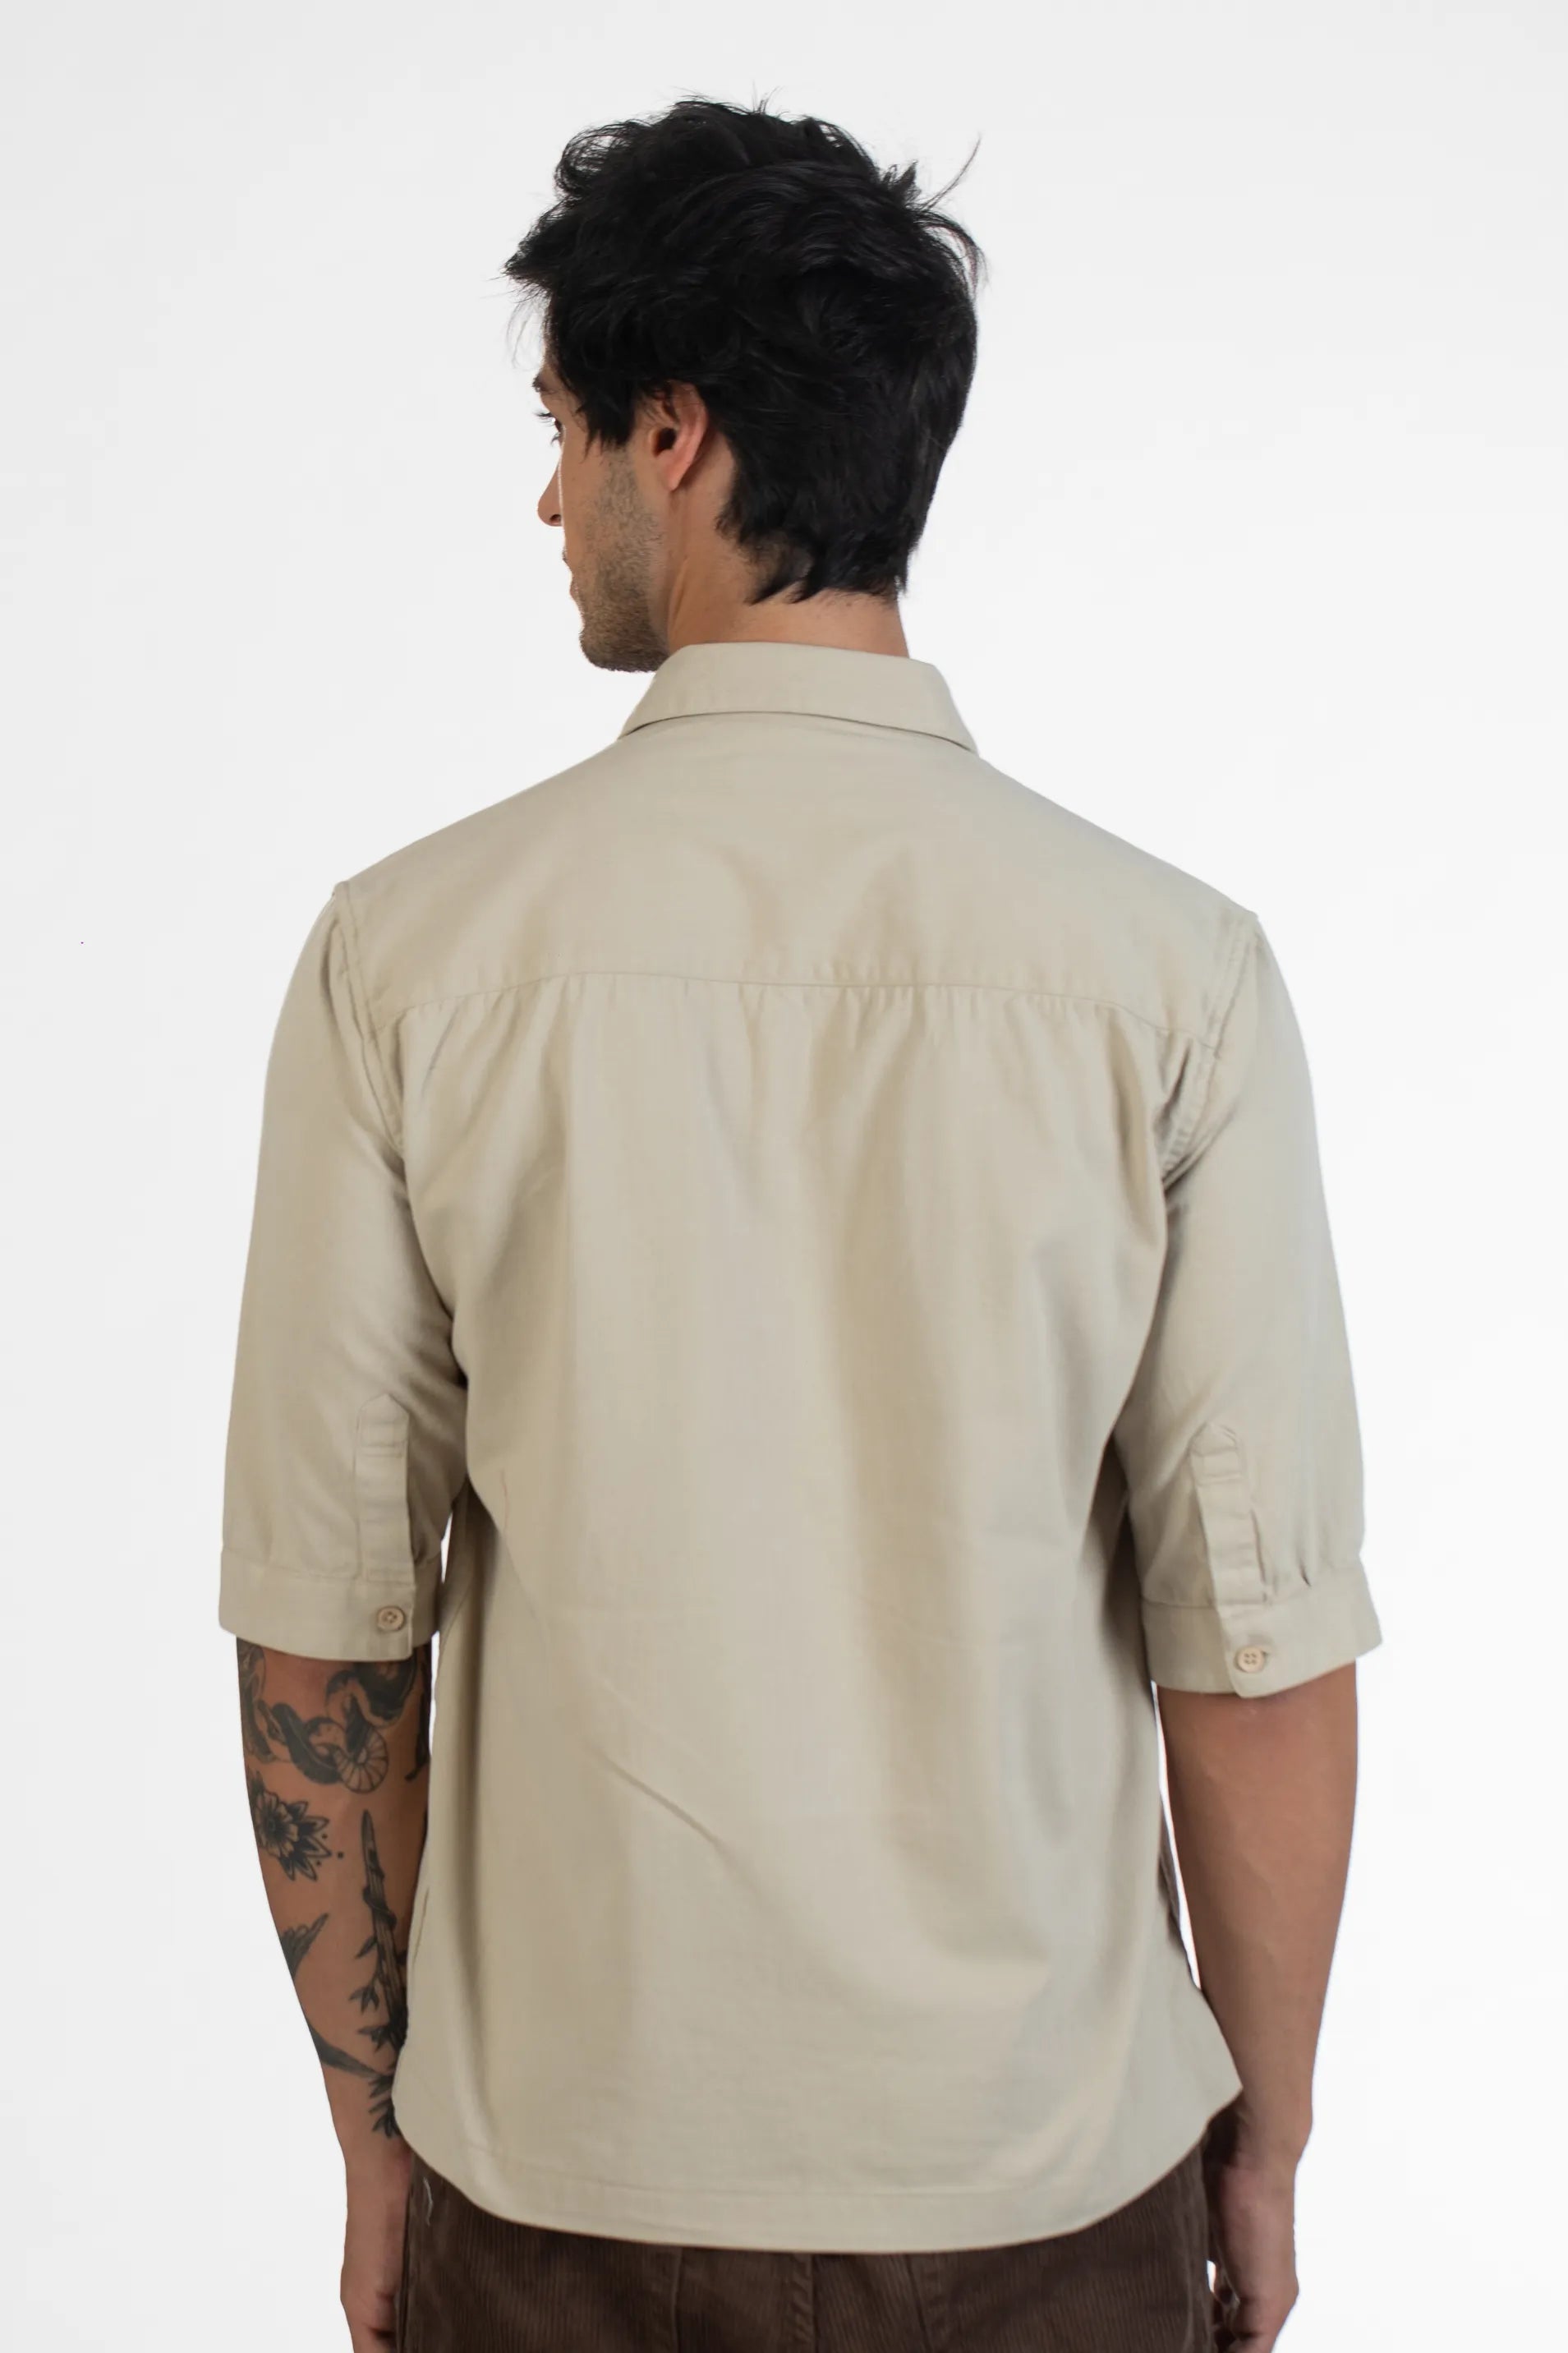 Buy Five Sleeve Cavalry Twill Shirt Online.